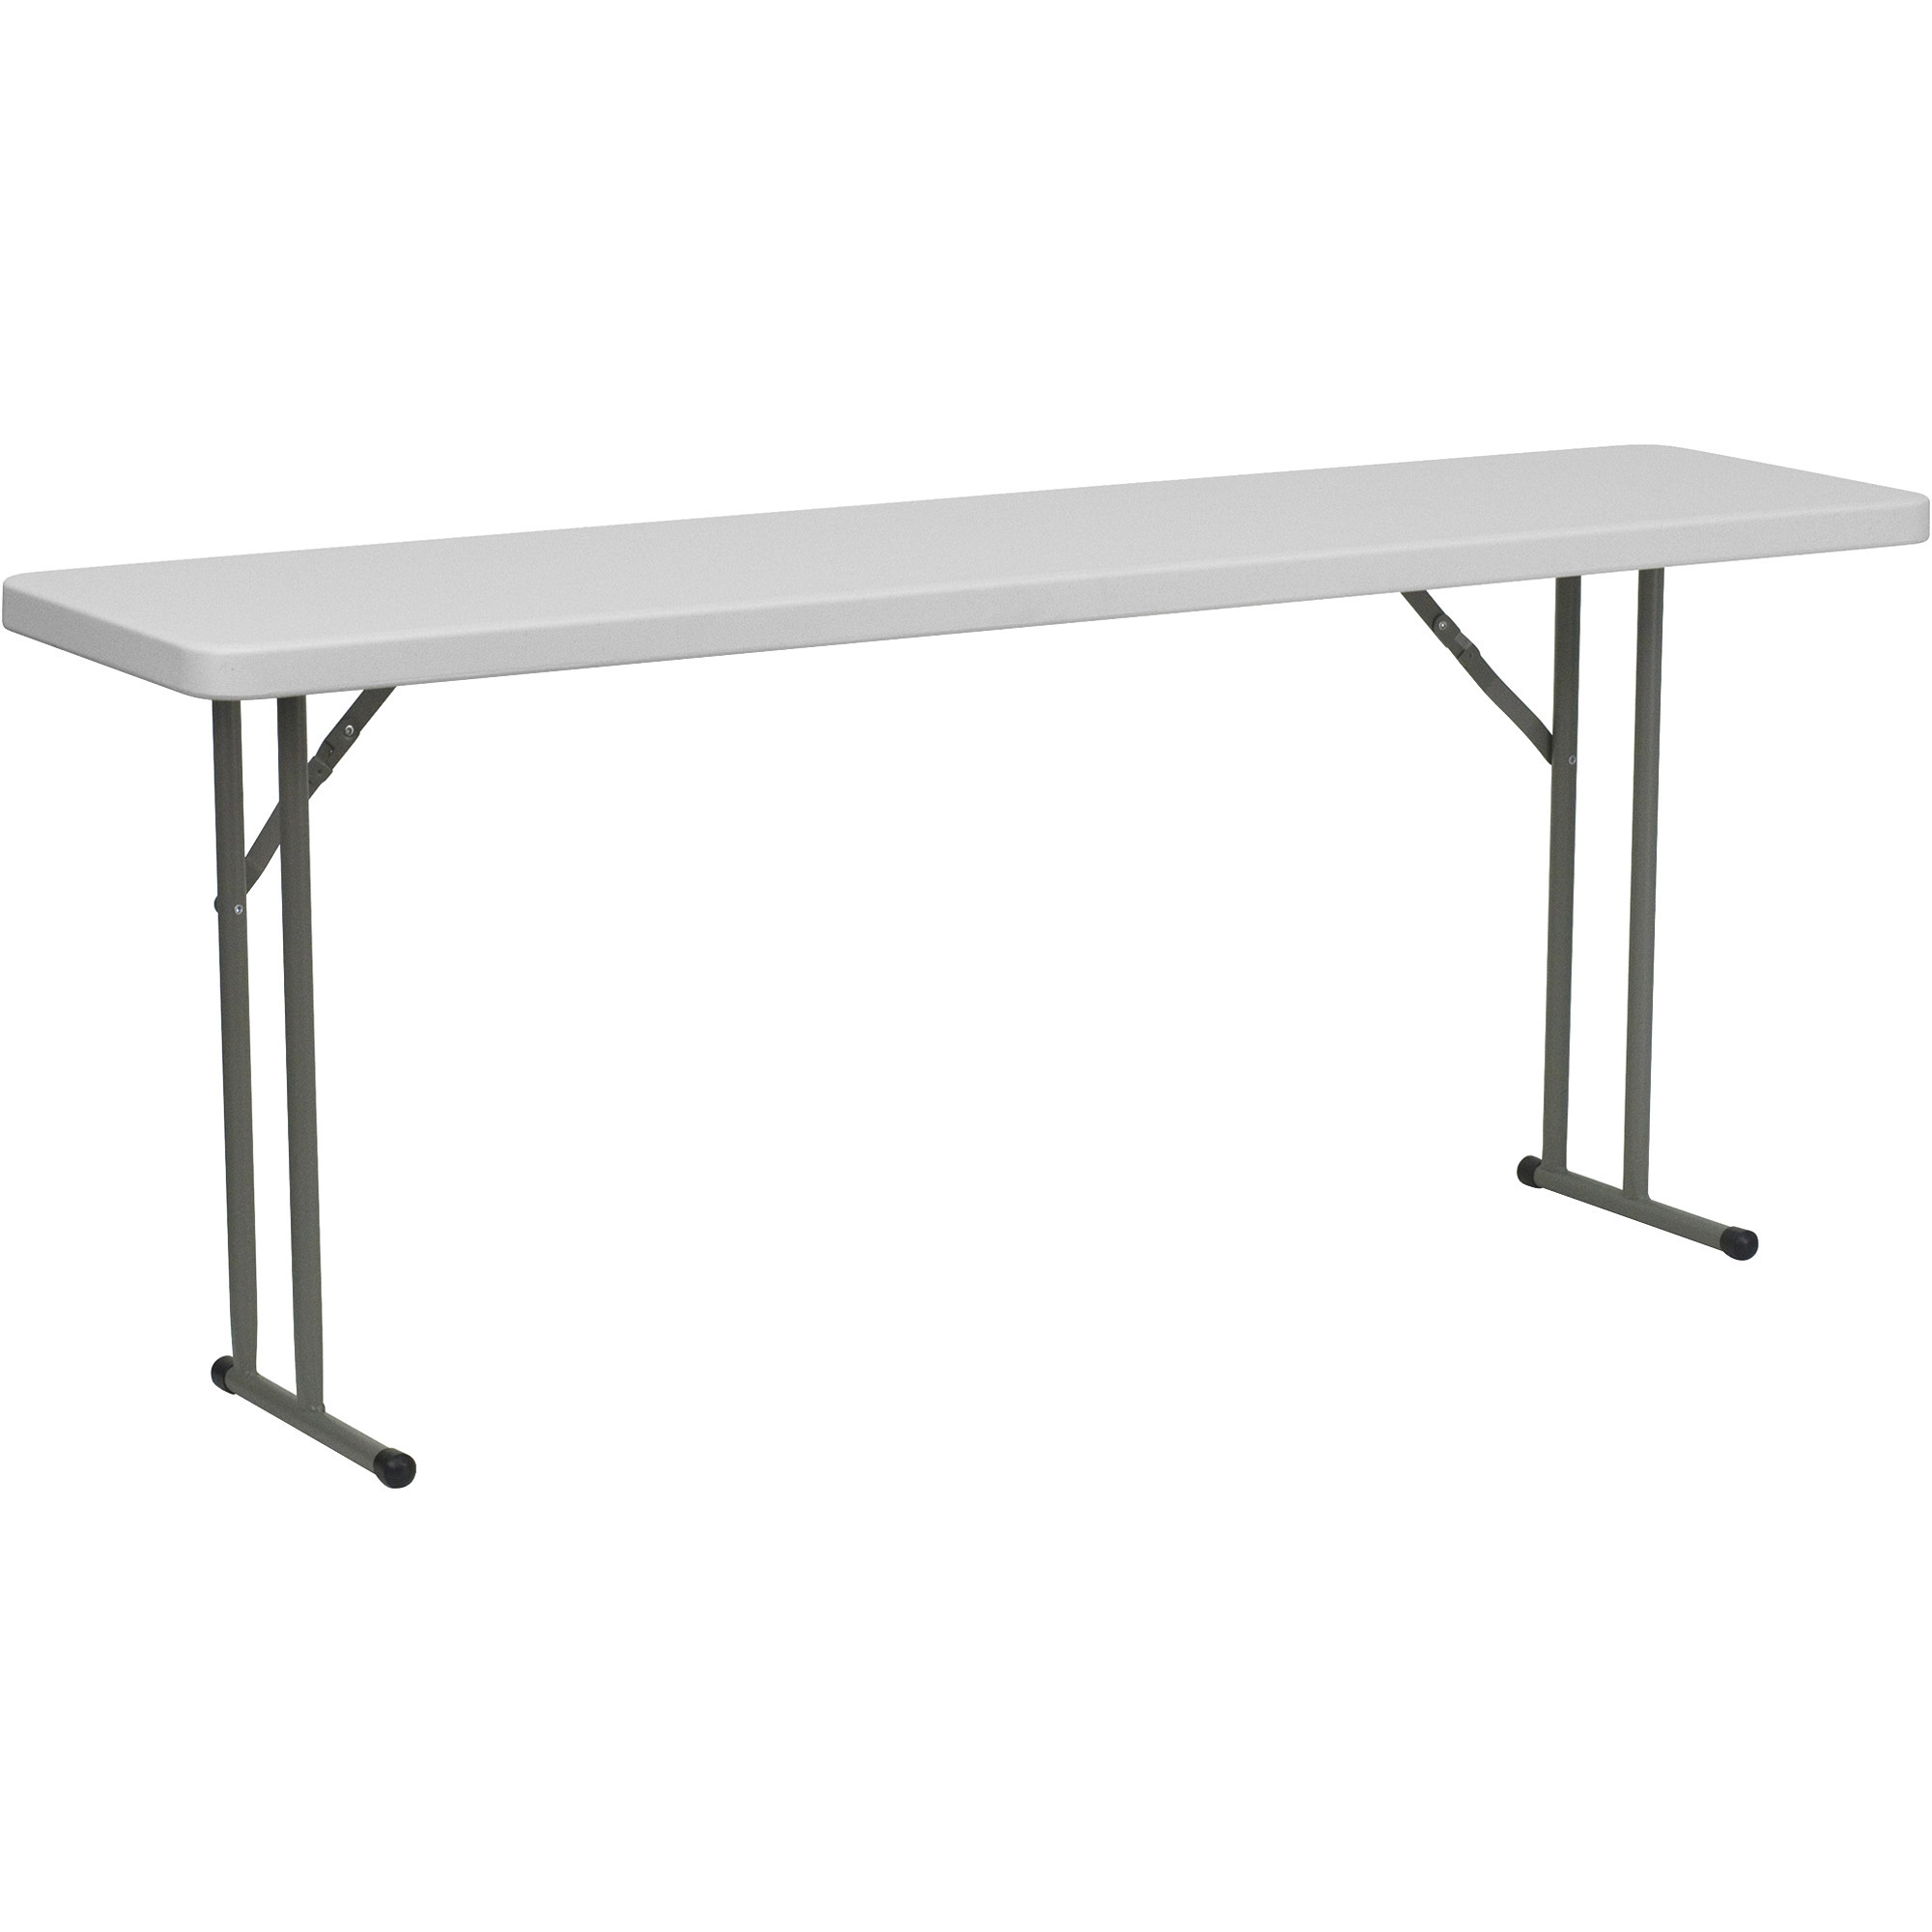 Flash Furniture 6Ft. Rectangular Plastic Training Table â Granite White, Model DADYCZ180GW